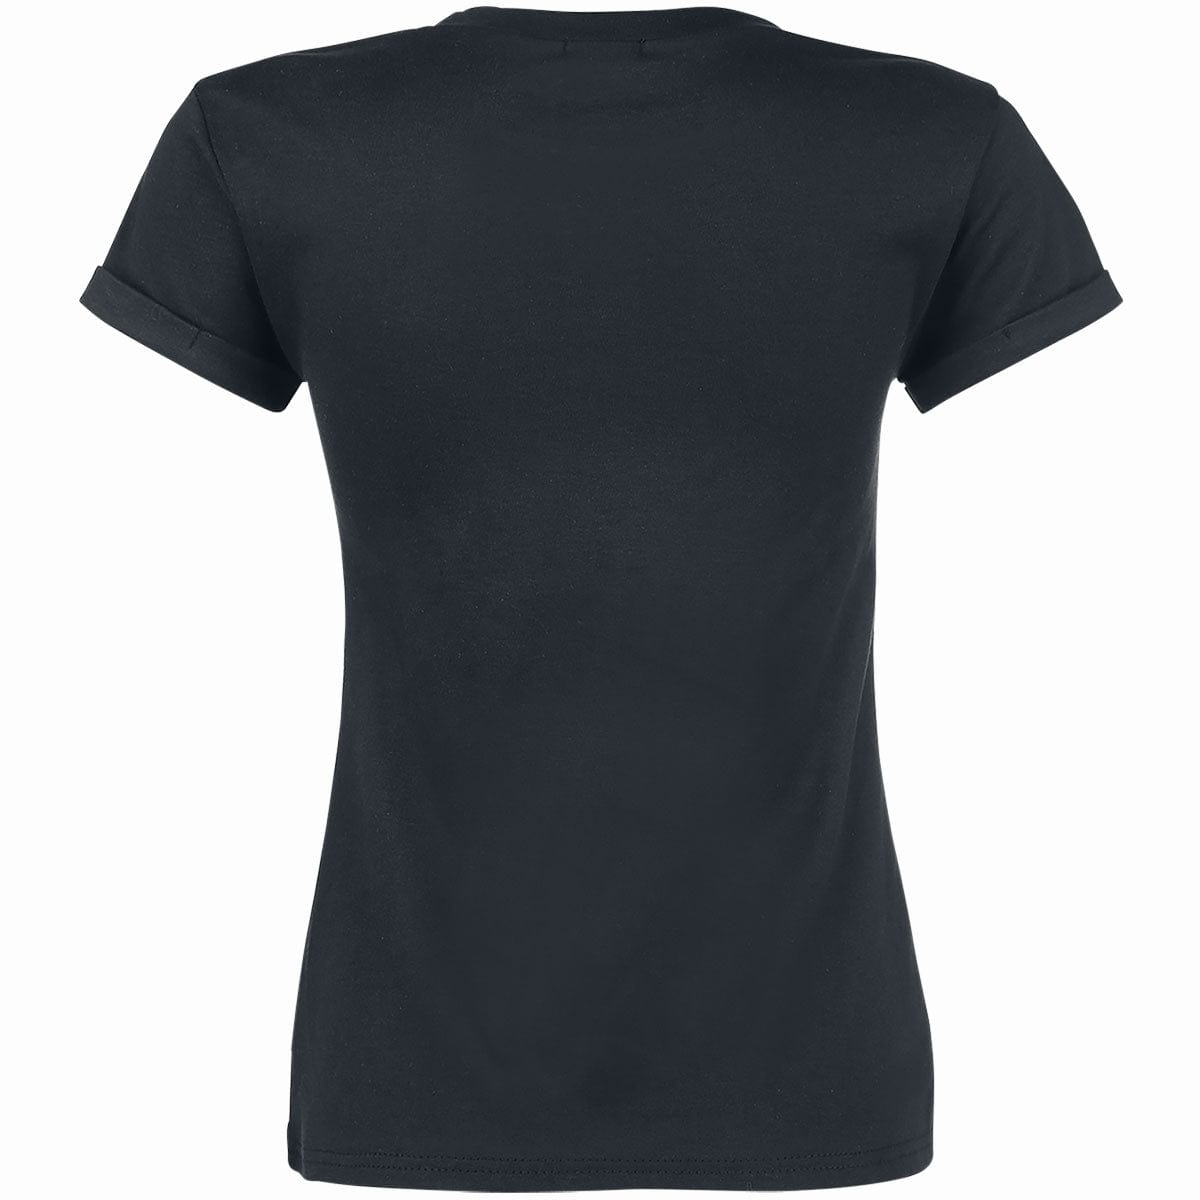 URBAN FASHION - Girls Boatneck Cap Sleeve T-Shirt - Spiral USA